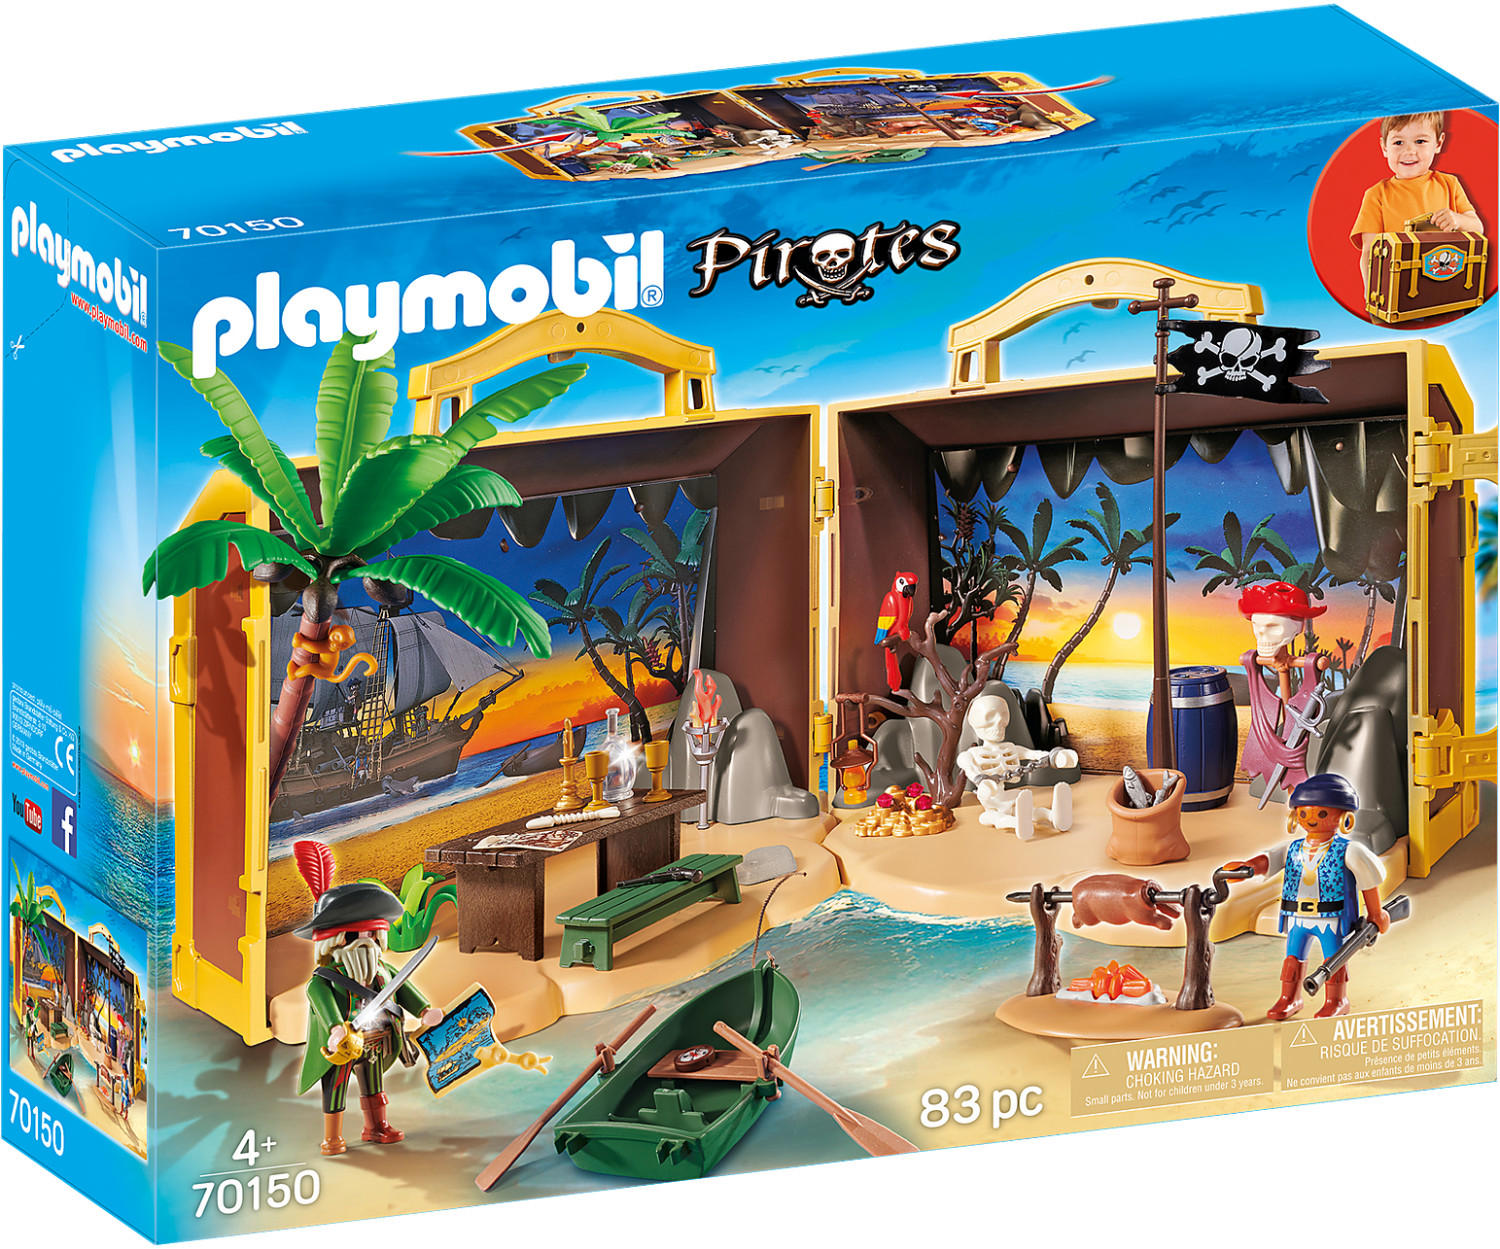 Playmobil Pirates - Takeaway Pirate Island (70150)